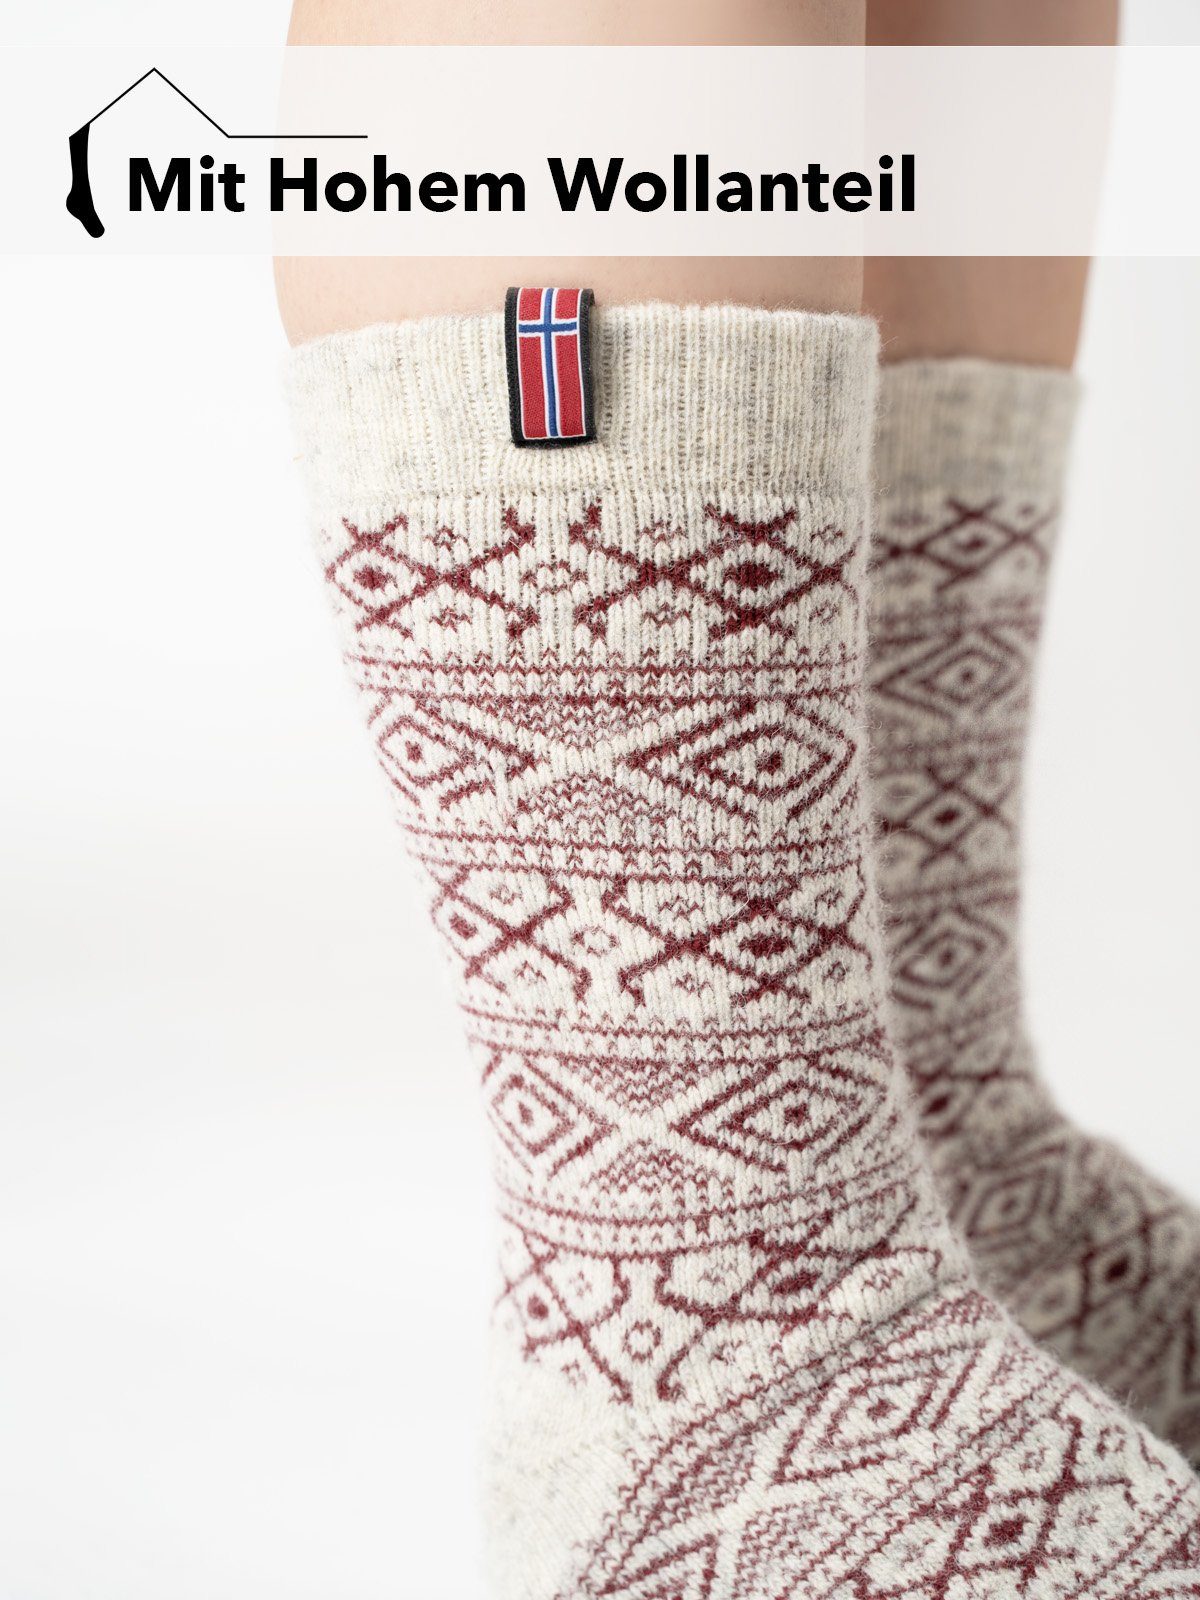 HomeOfSocks Norwegersocken Skandinavische Wollsocke Design Warm Wolle Dicke Wollanteil 80% Anthrazit Mit Hyggelig Norwegischem Hohem Aus Kuschelsocken Nordic Socken In "Norwegen"